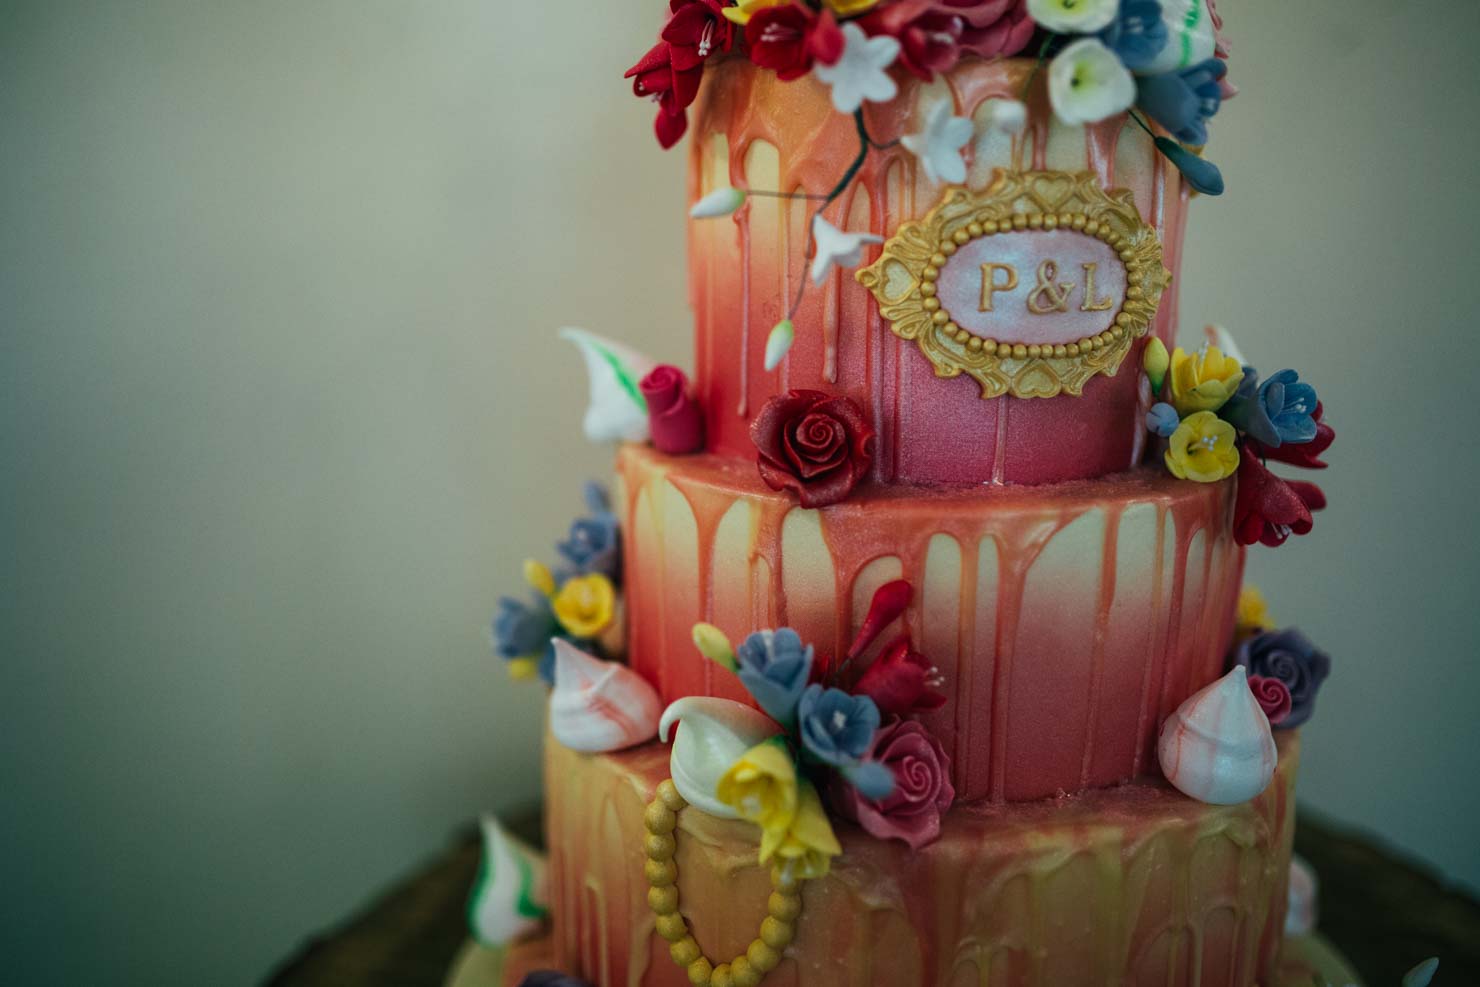 woodhall manor wedding cake